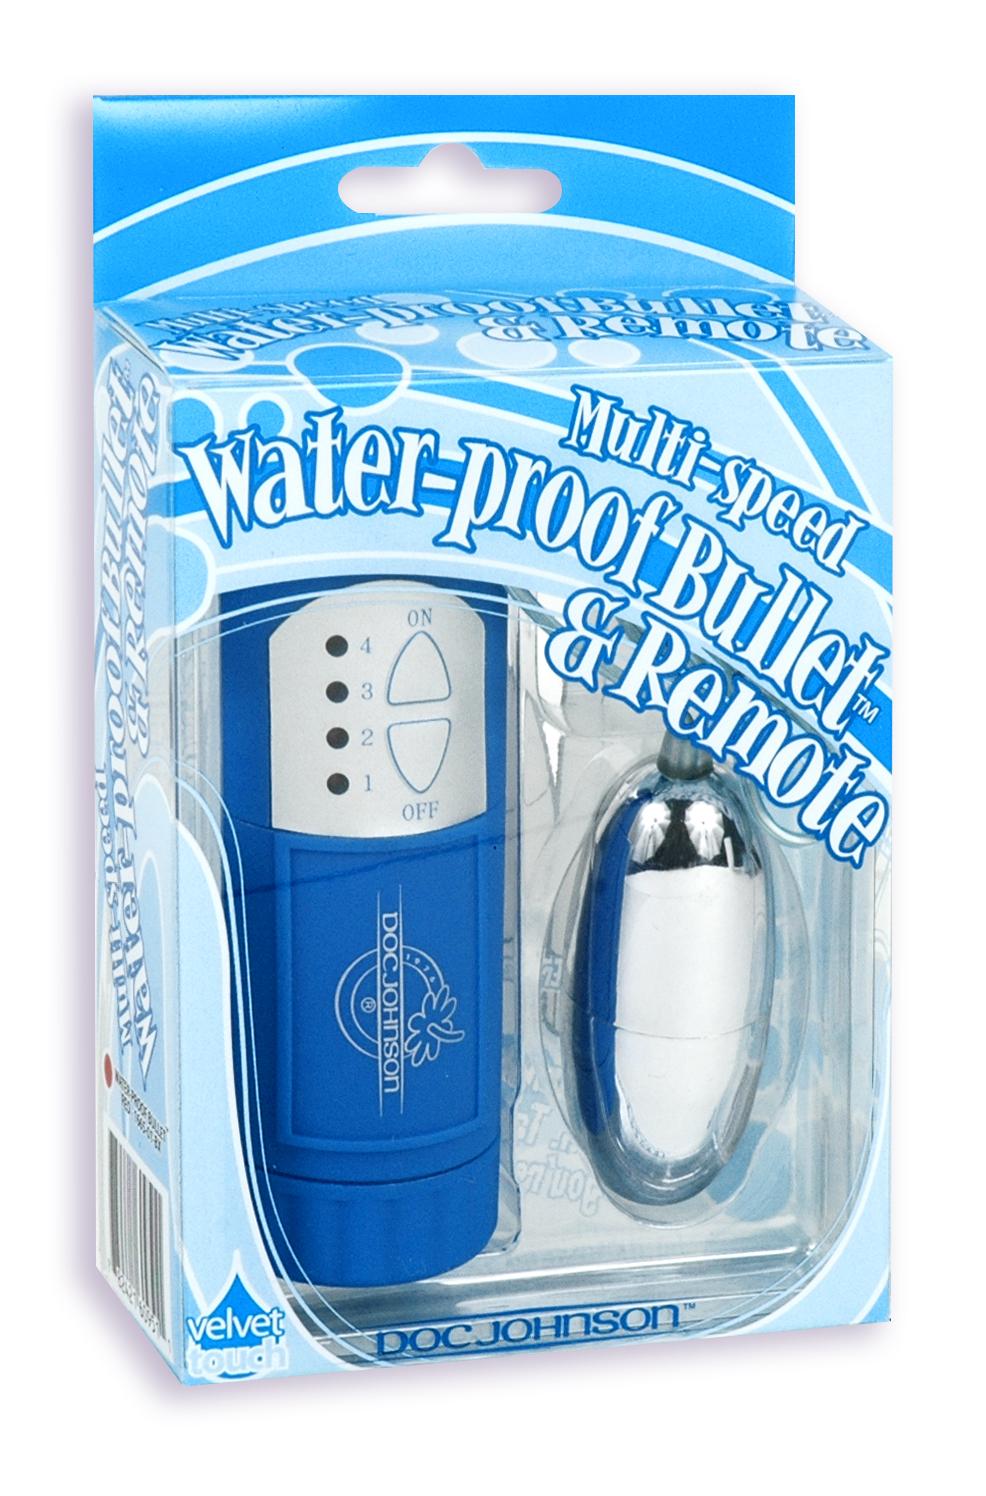 Multi speed waterproof jelly vibrator